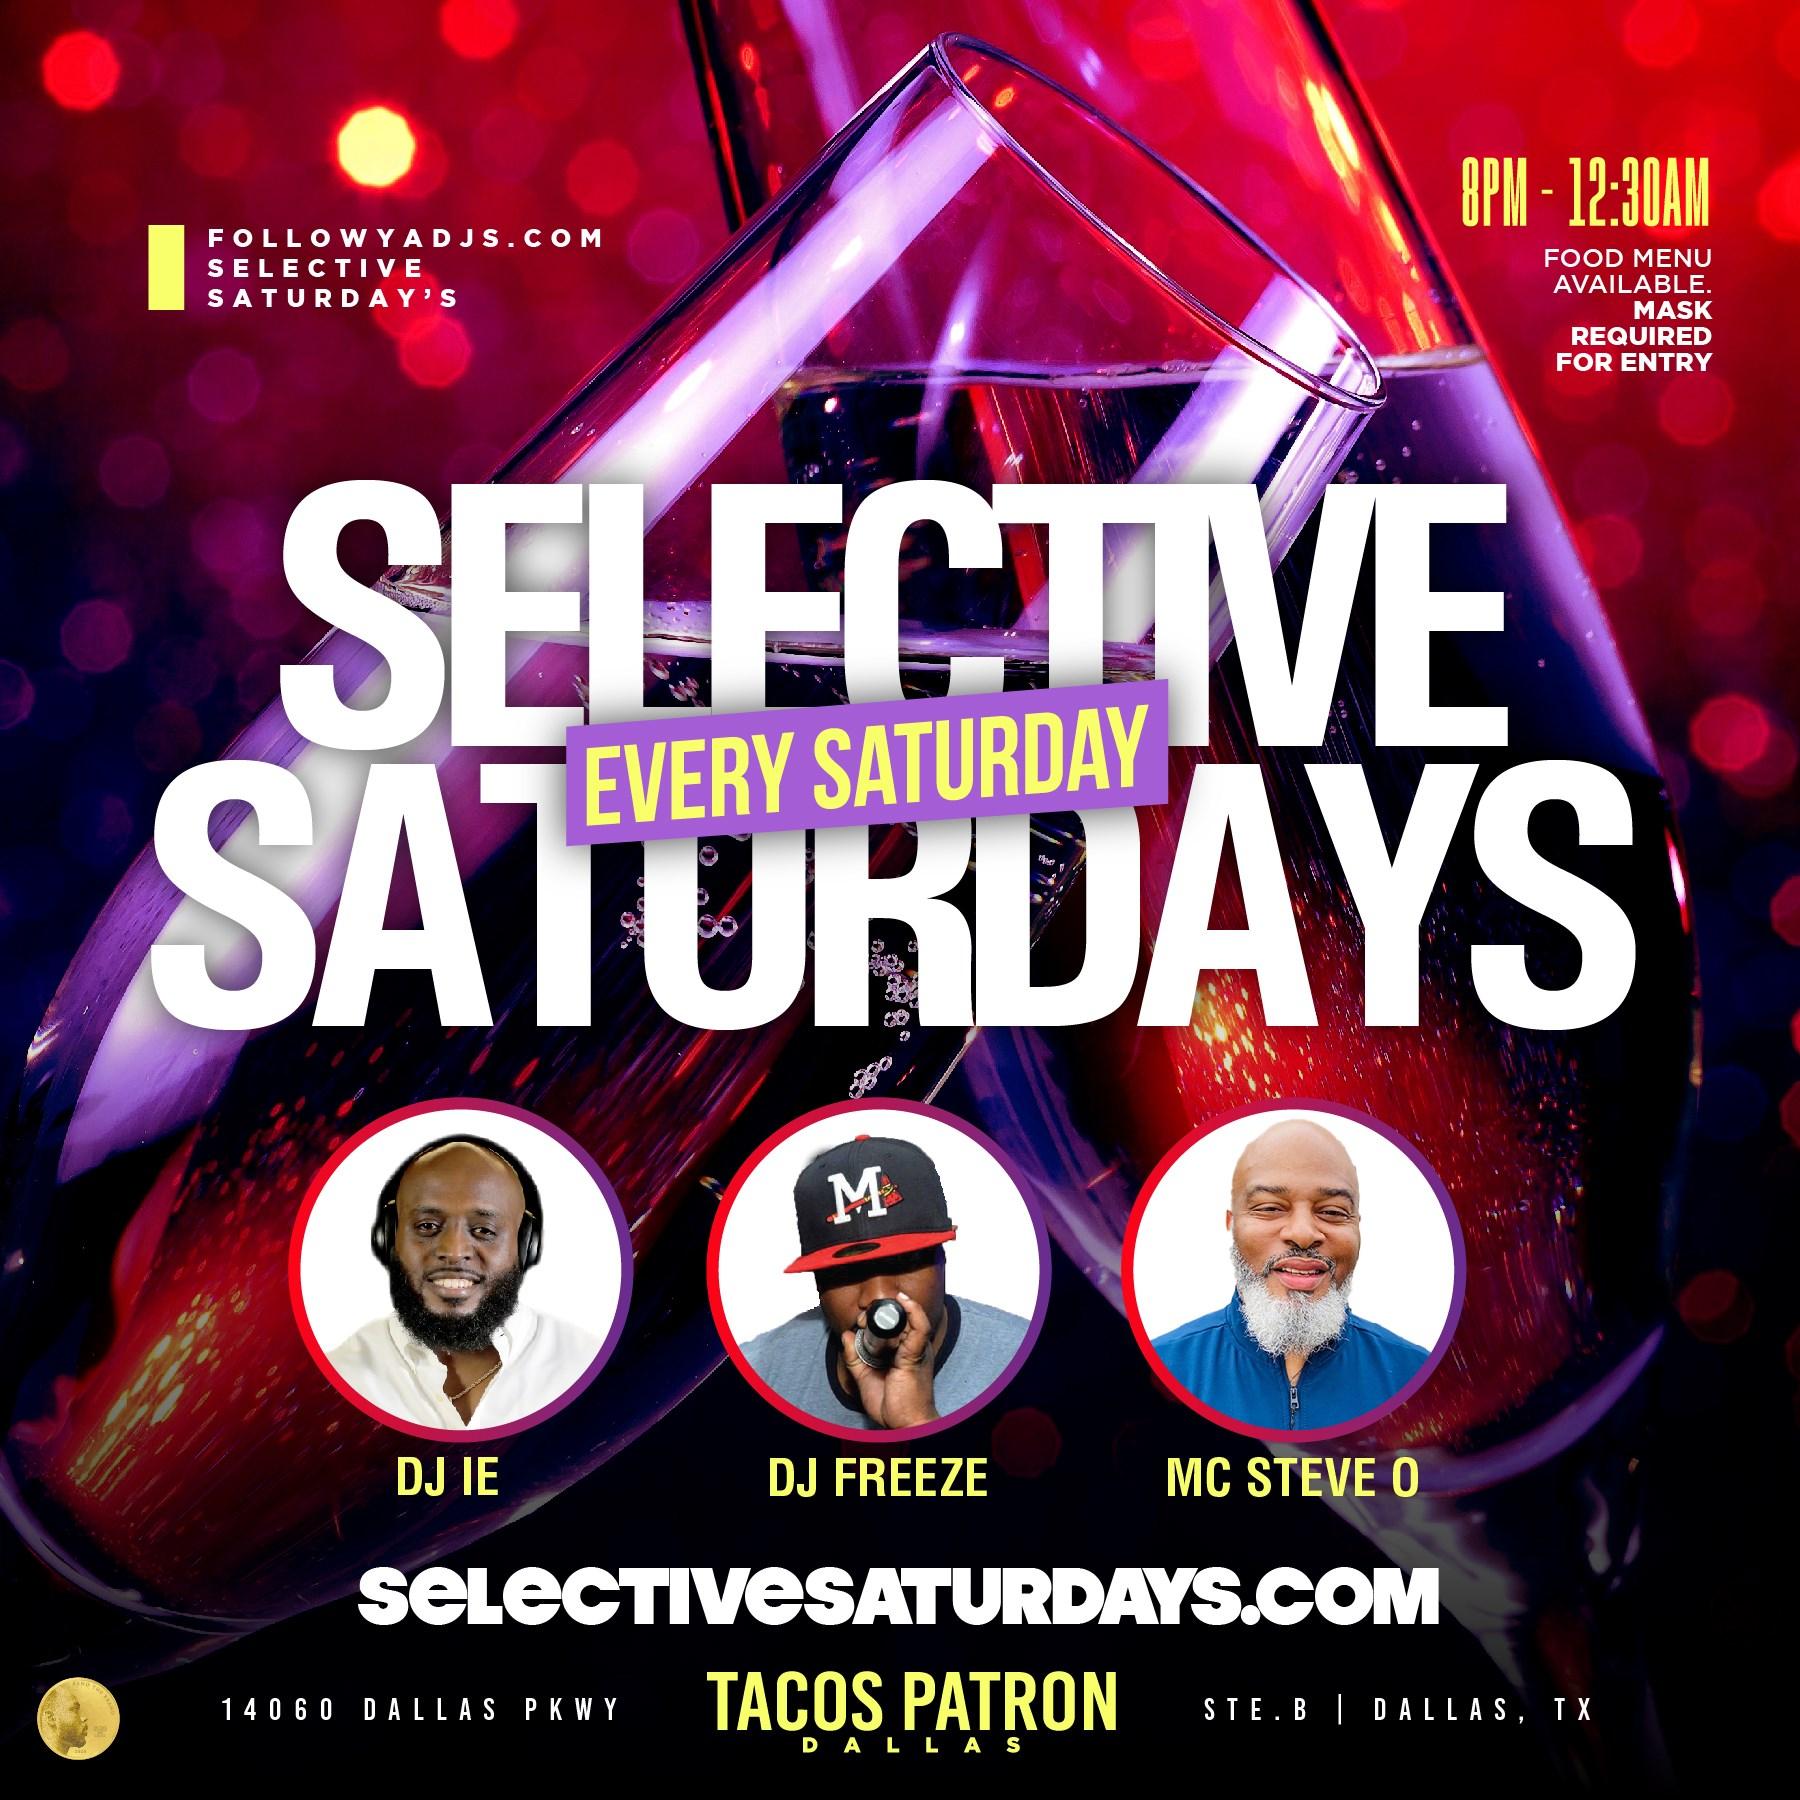 Selective Saturdays